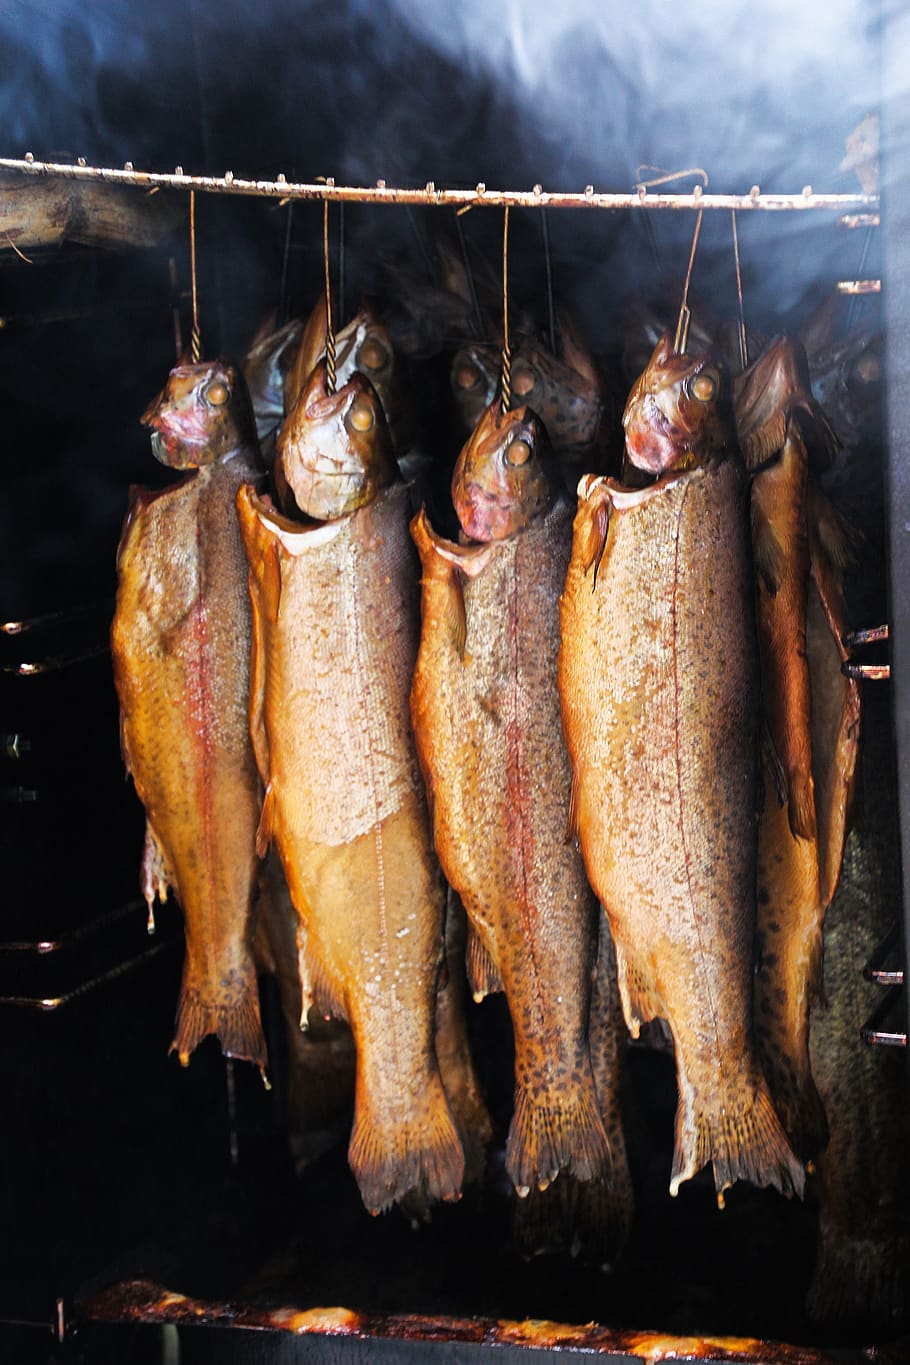 ikan, ikan asap, diasap, penangkapan ikan, merokok, lezat, ikan forel, asap ikan trout, rumah asap, oven merokok